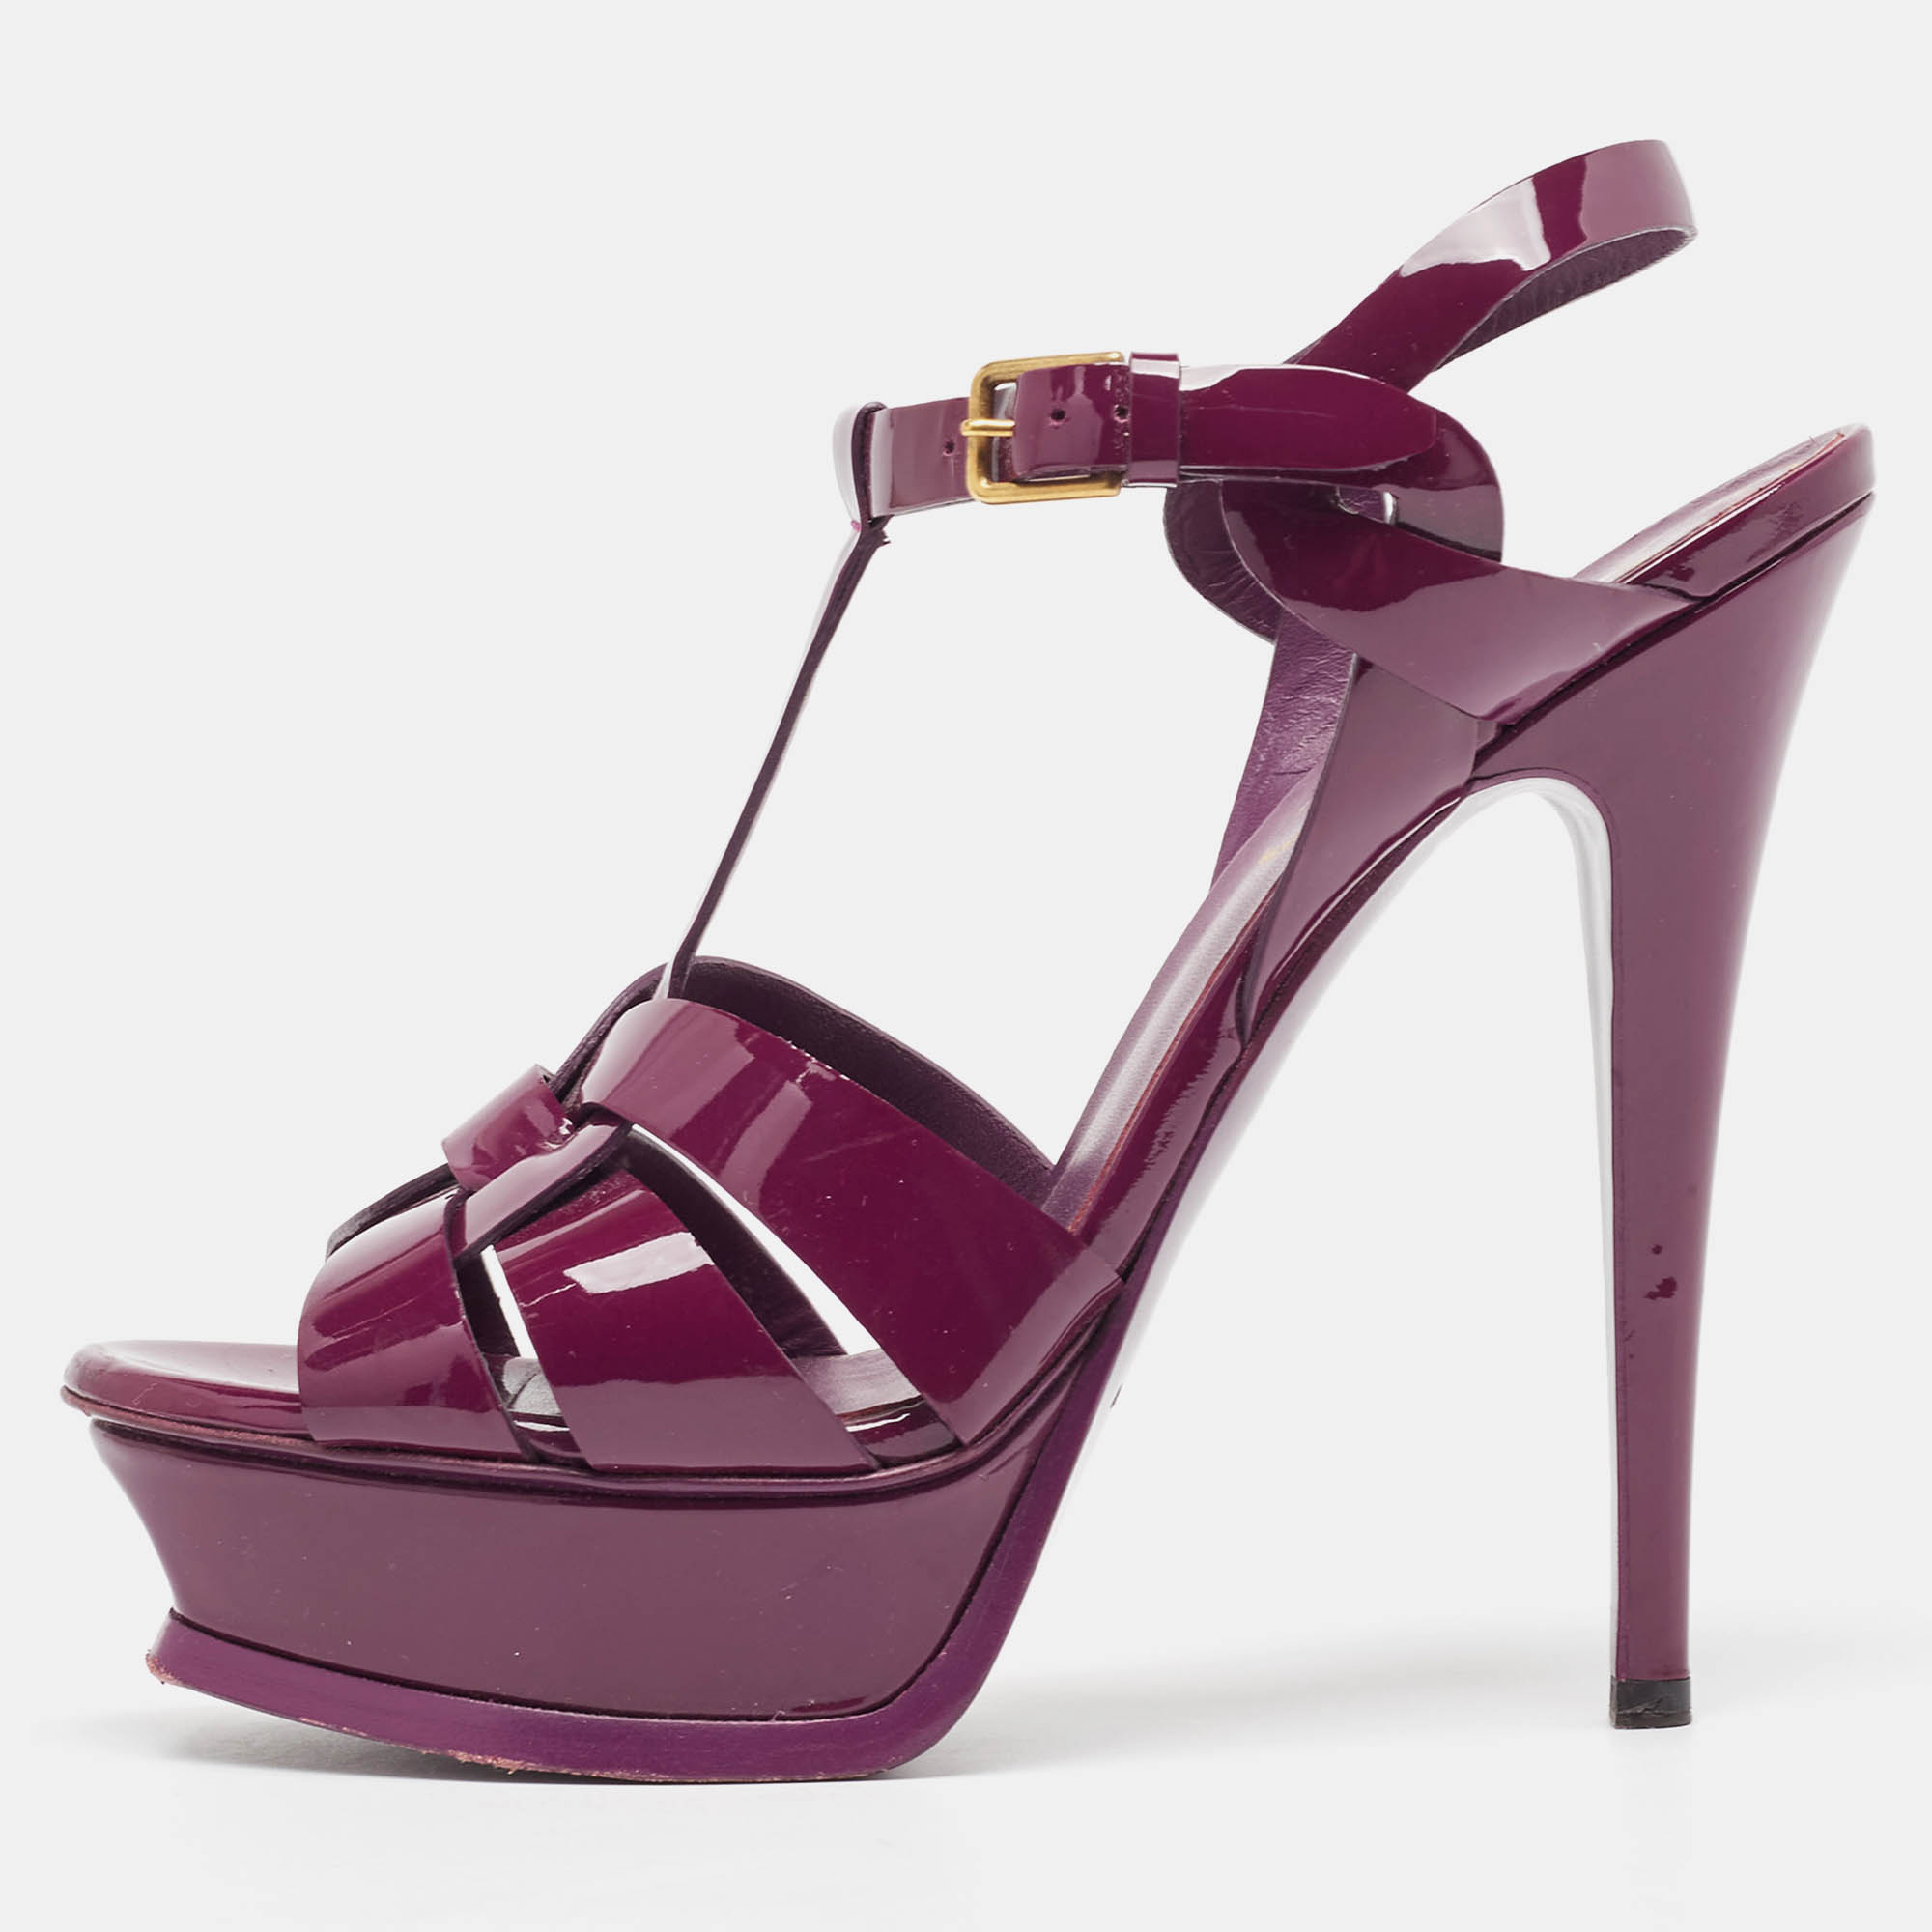 Yves saint laurent burgundy patent leather tribute platform ankle strap sandals size 37